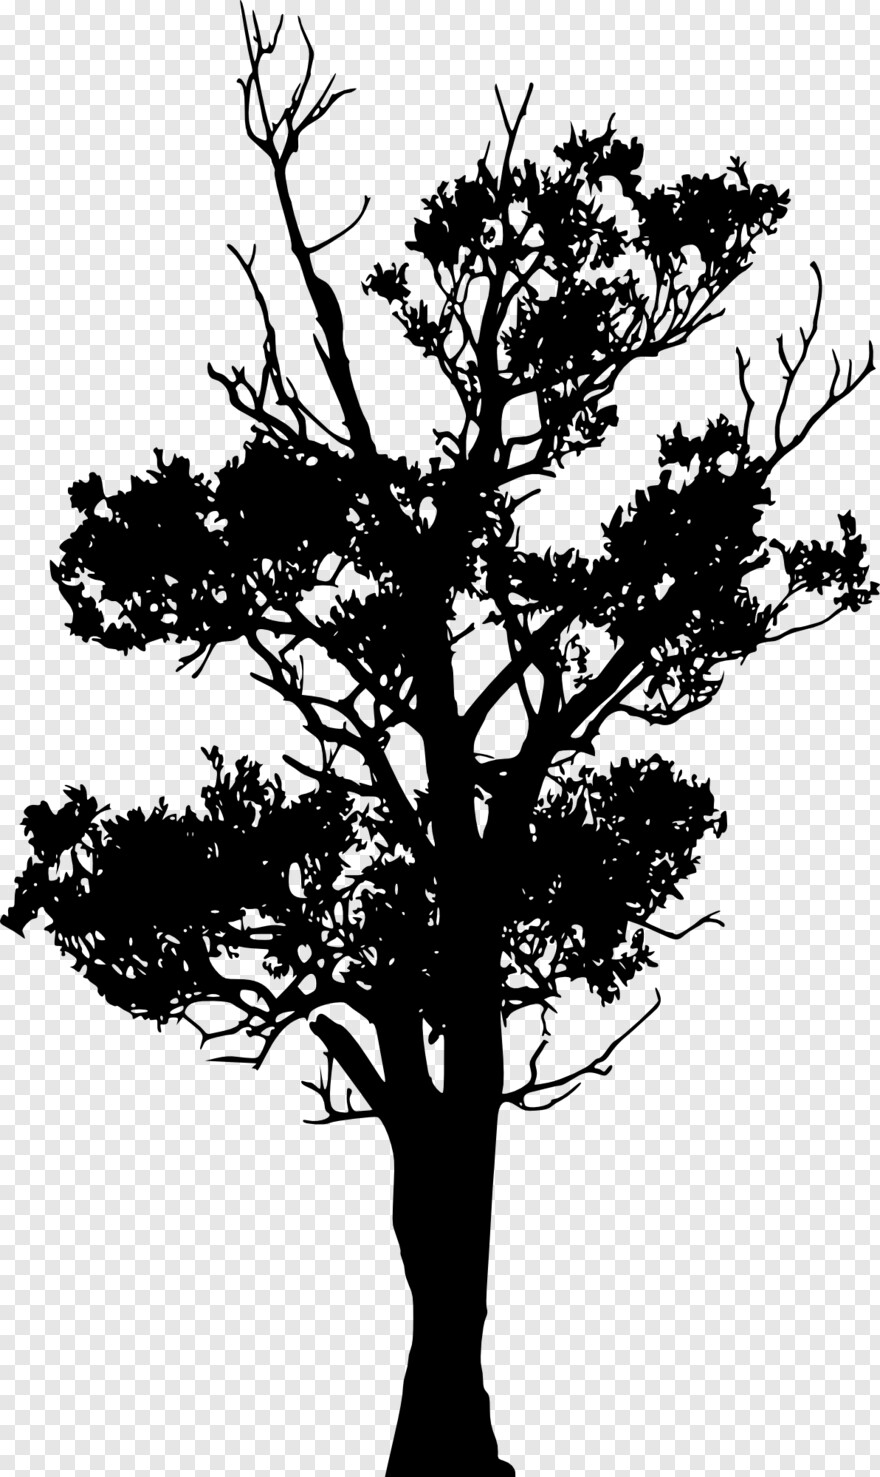 tree-icon # 459613